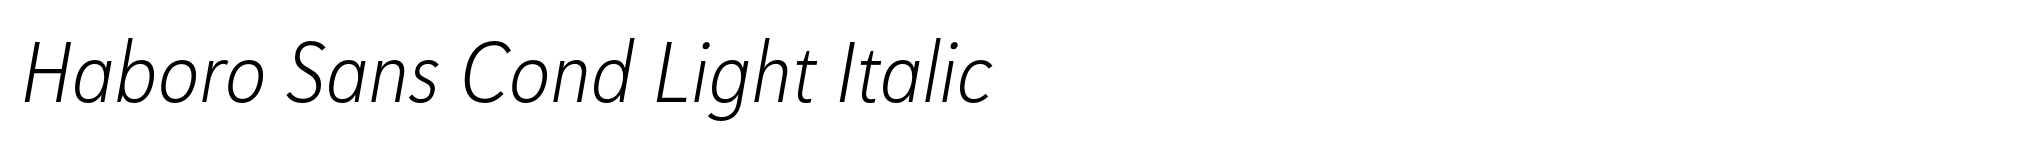 Haboro Sans Cond Light Italic image